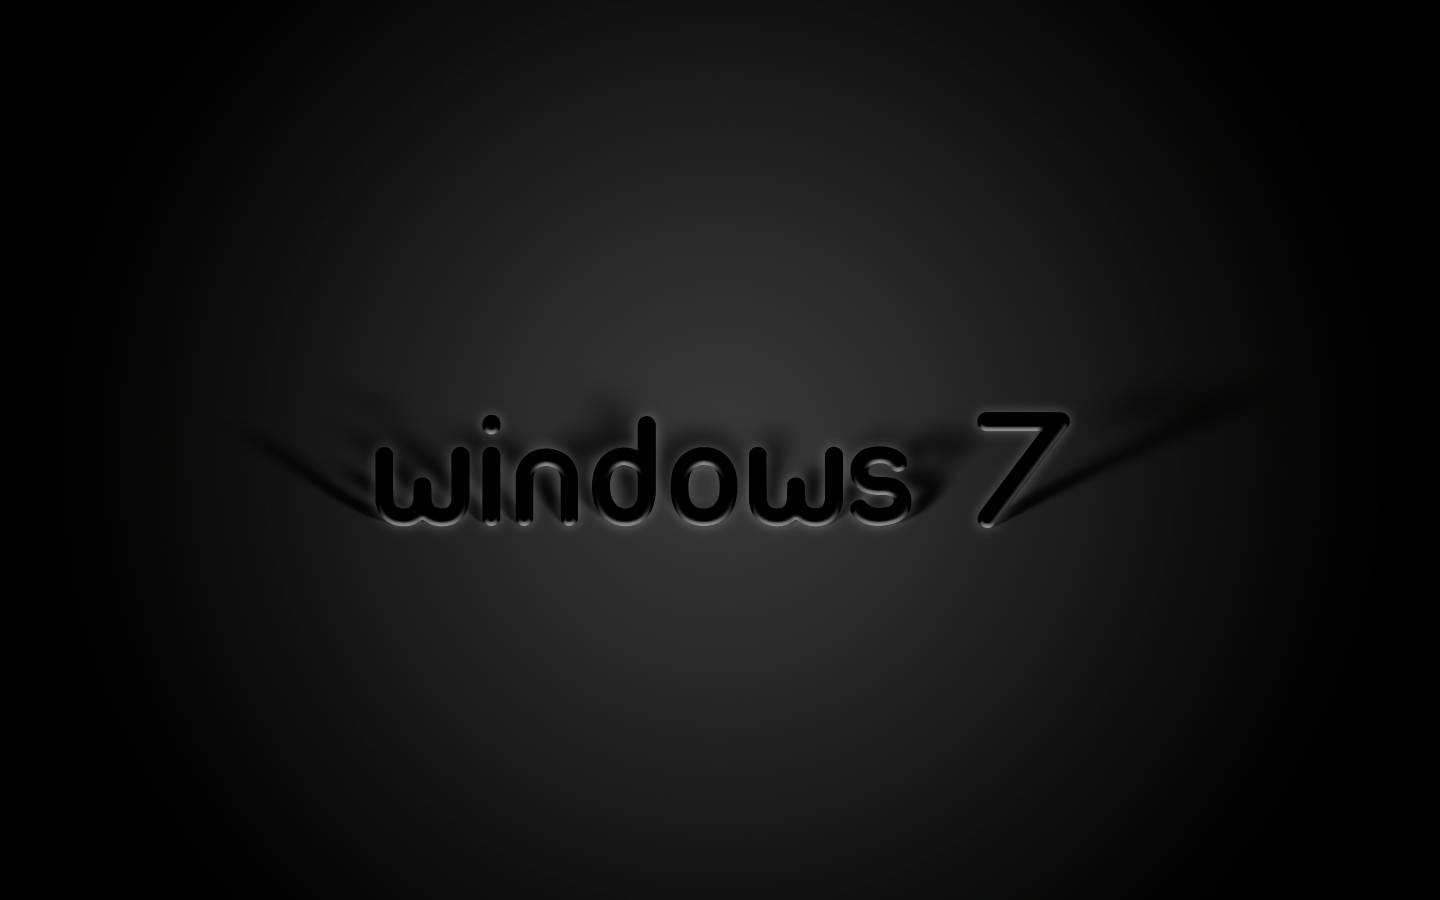 Wallpaper For > Windows 7 Wallpaper Black And White